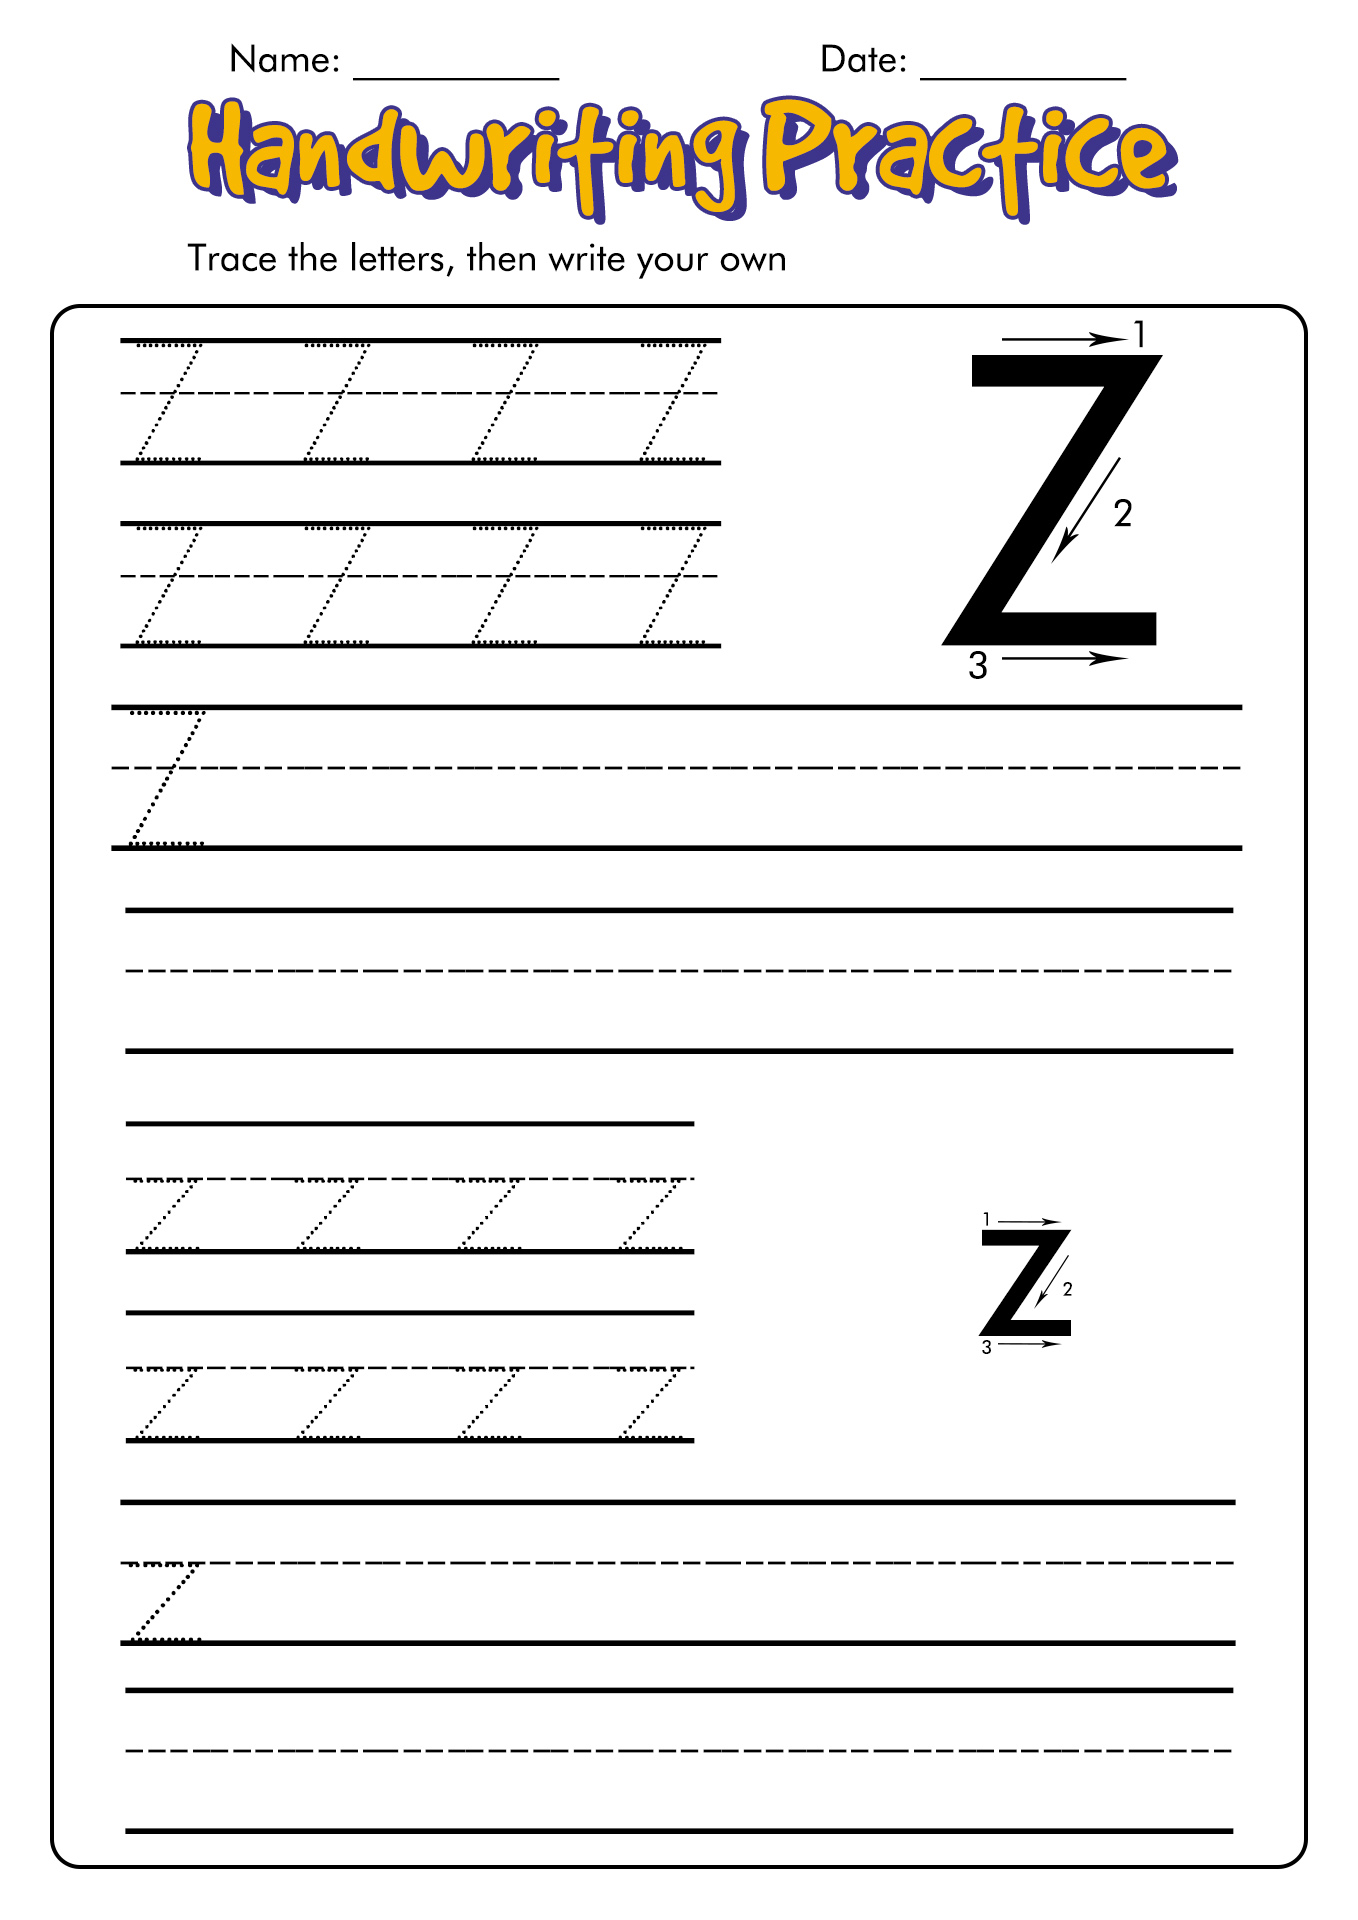 Alphabet Handwriting Practice Image